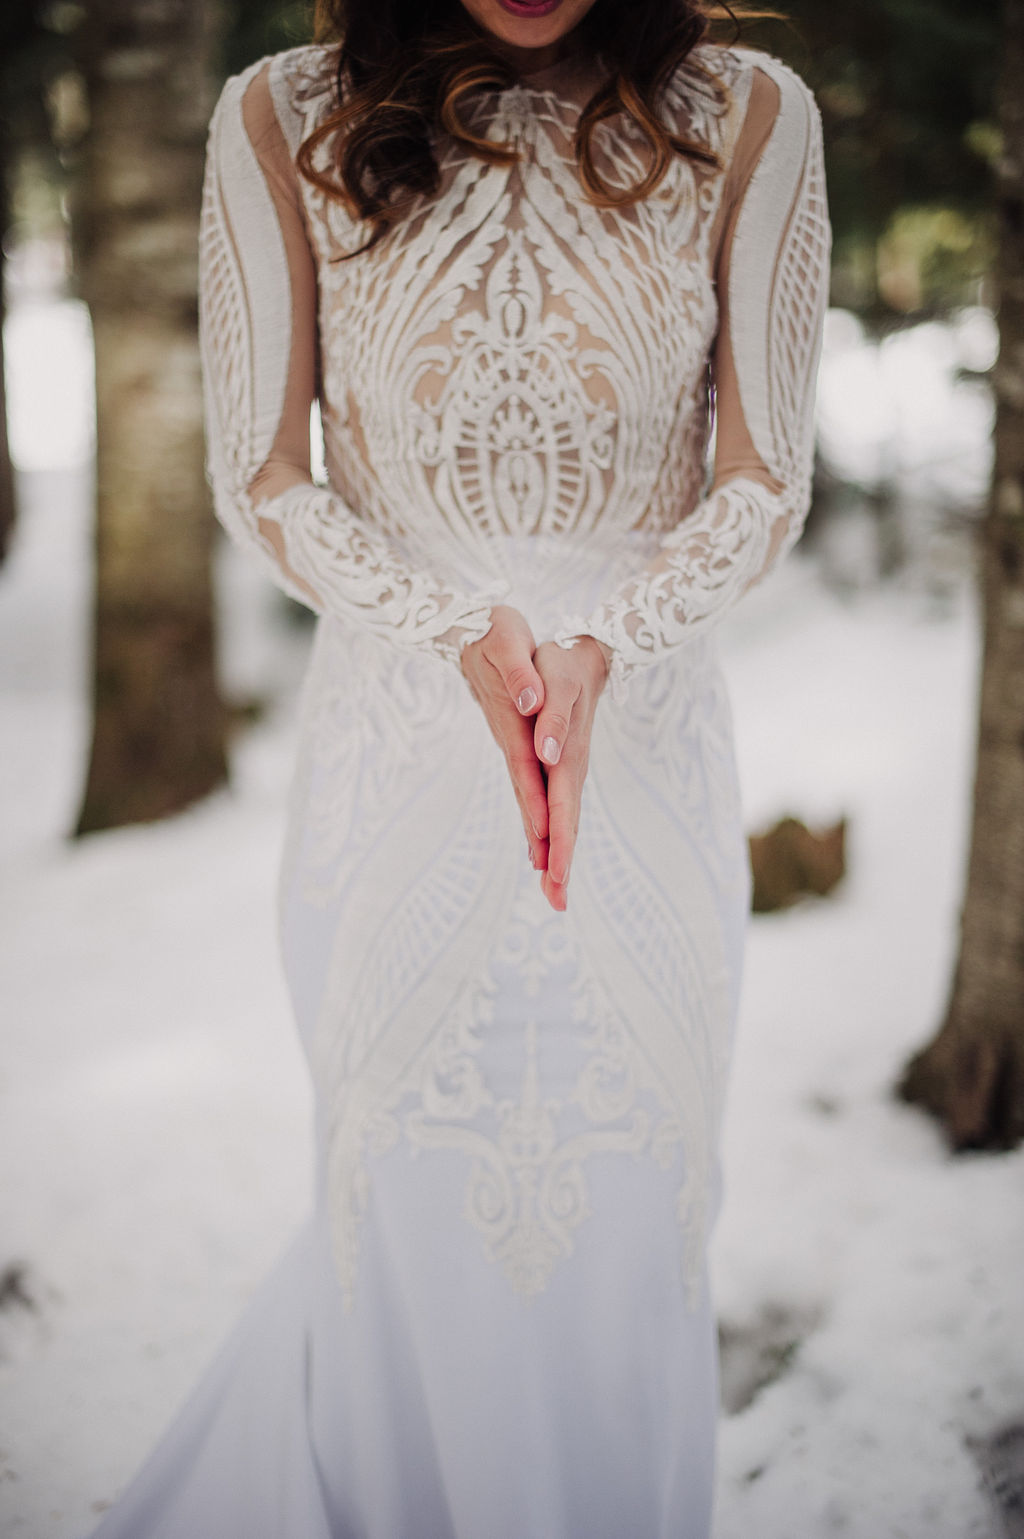 Winter Wedding Dress